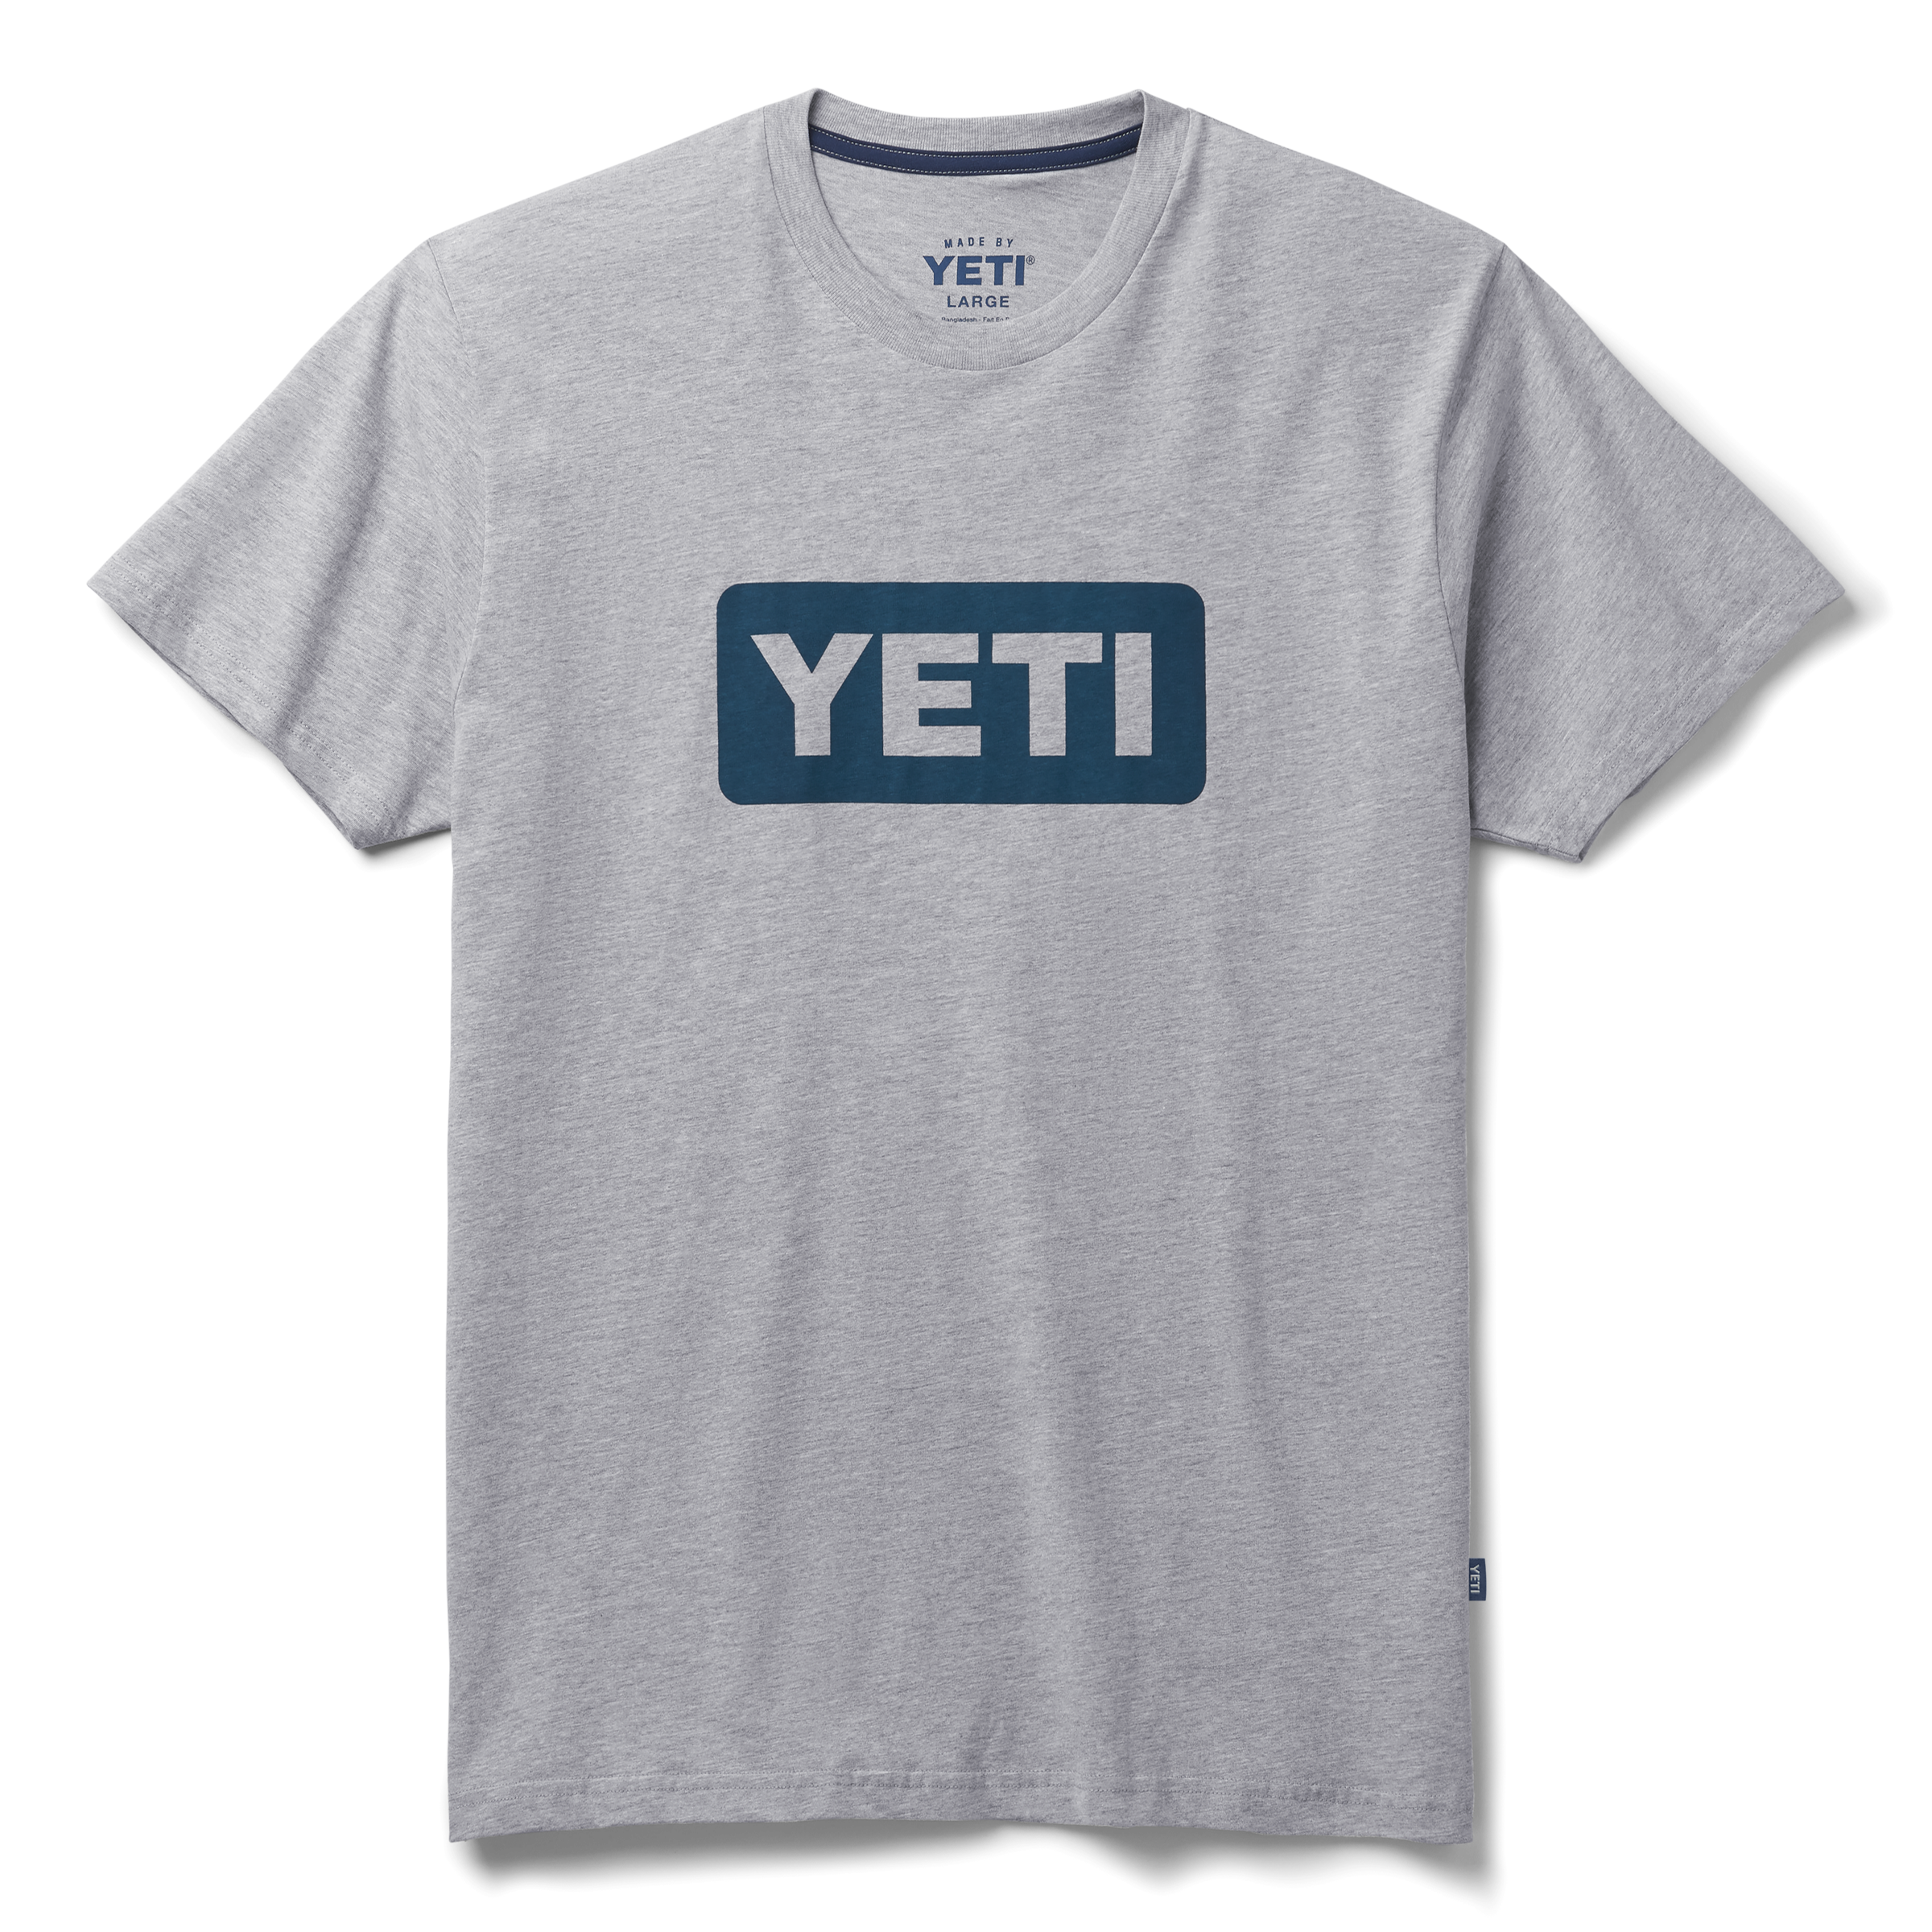 Yeti TShirt Mens XL Blue Short Sleeve Cotton Fishing Shirt Outdoors Camping  Work 